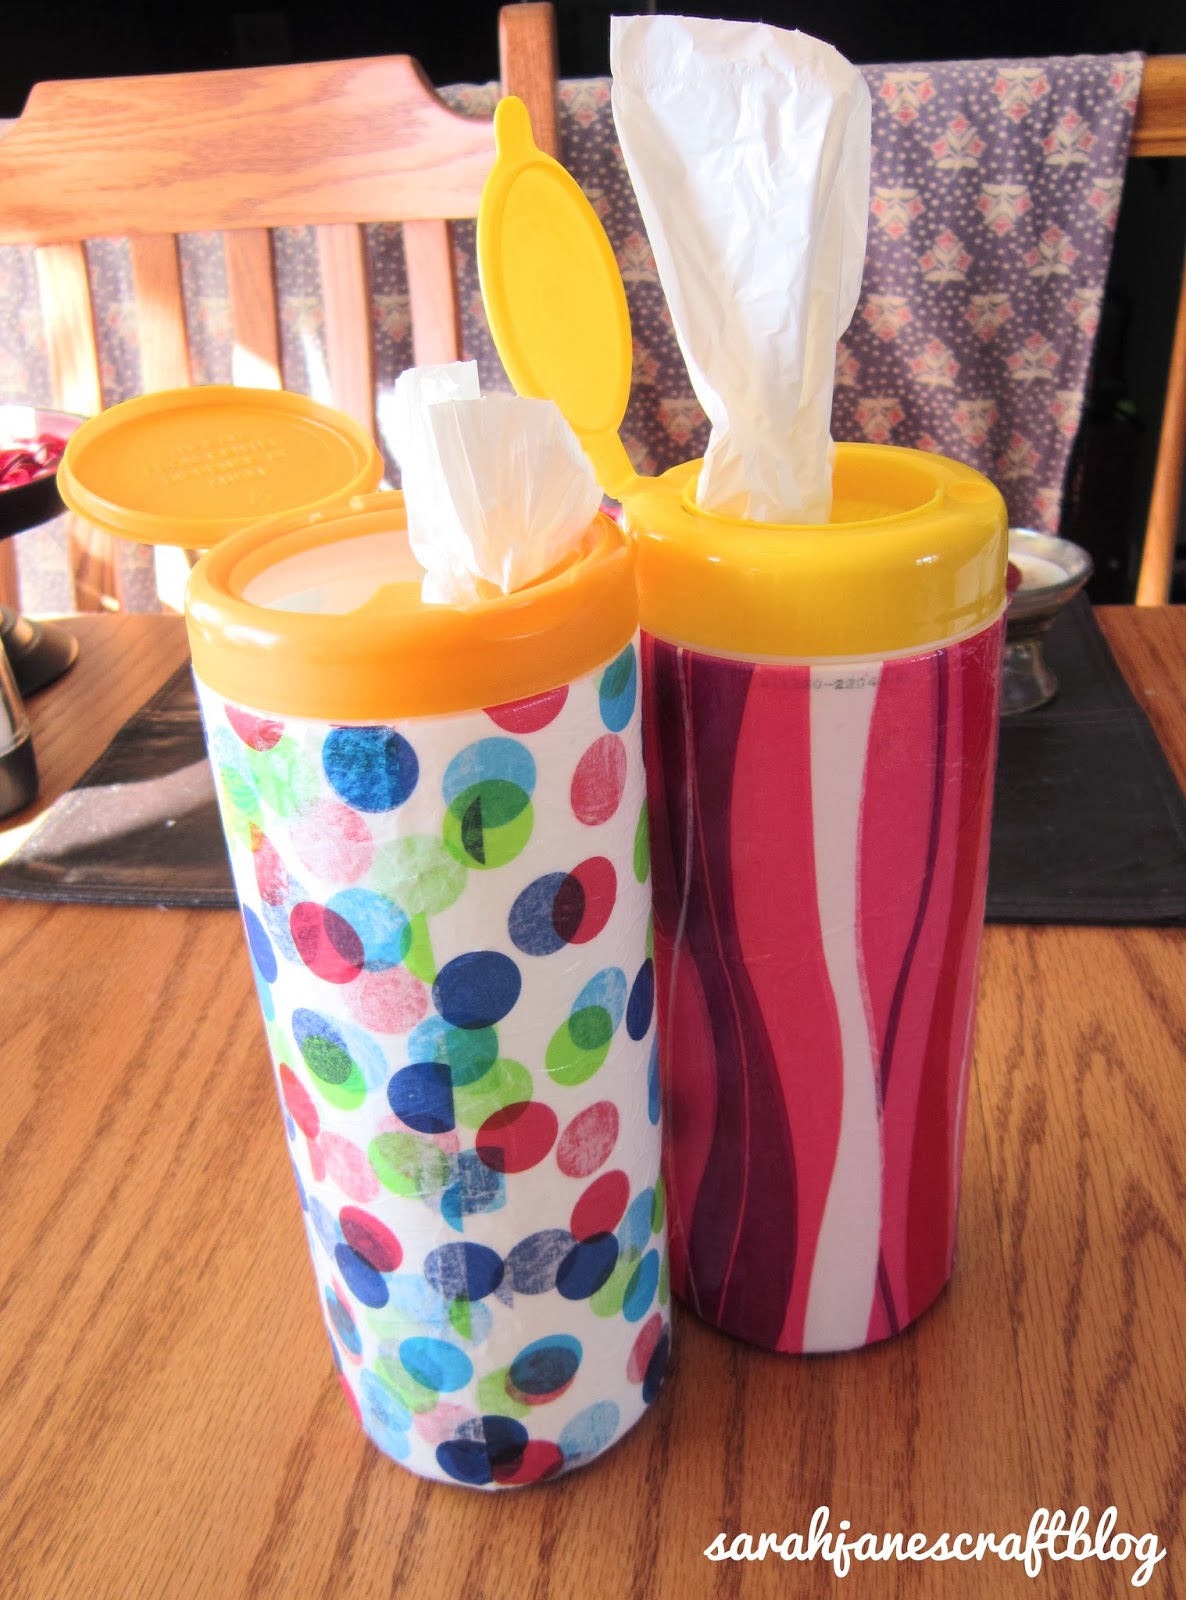 Sarah Jane's Craft Blog: Tissue Paper Covered Disinfectant Wipes Trash ...